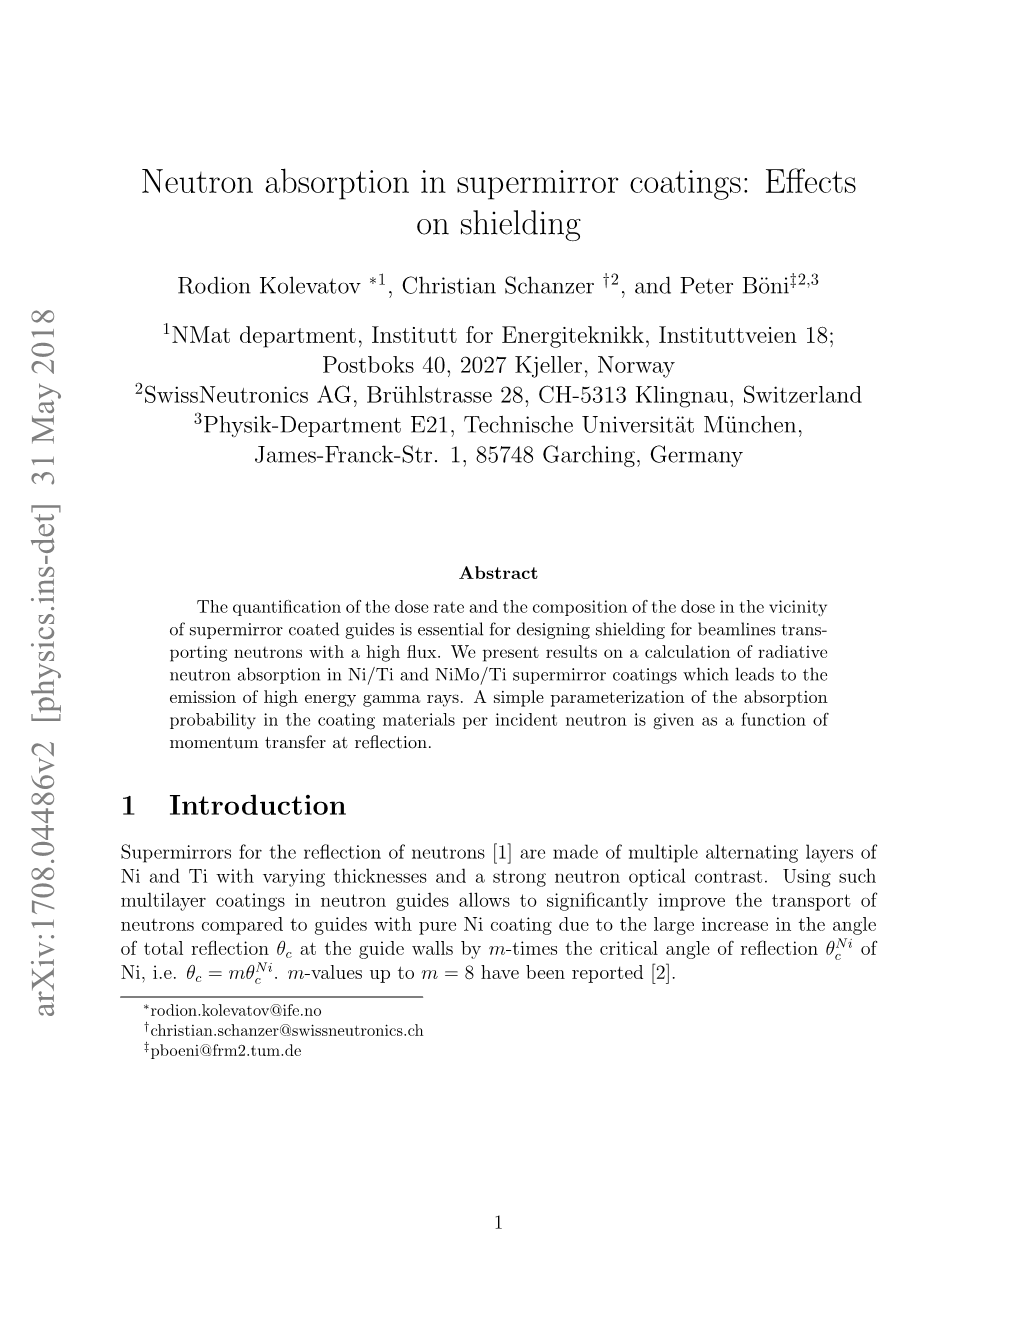 Neutron Absorption in Supermirror Coatings: Effects on Shielding Arxiv